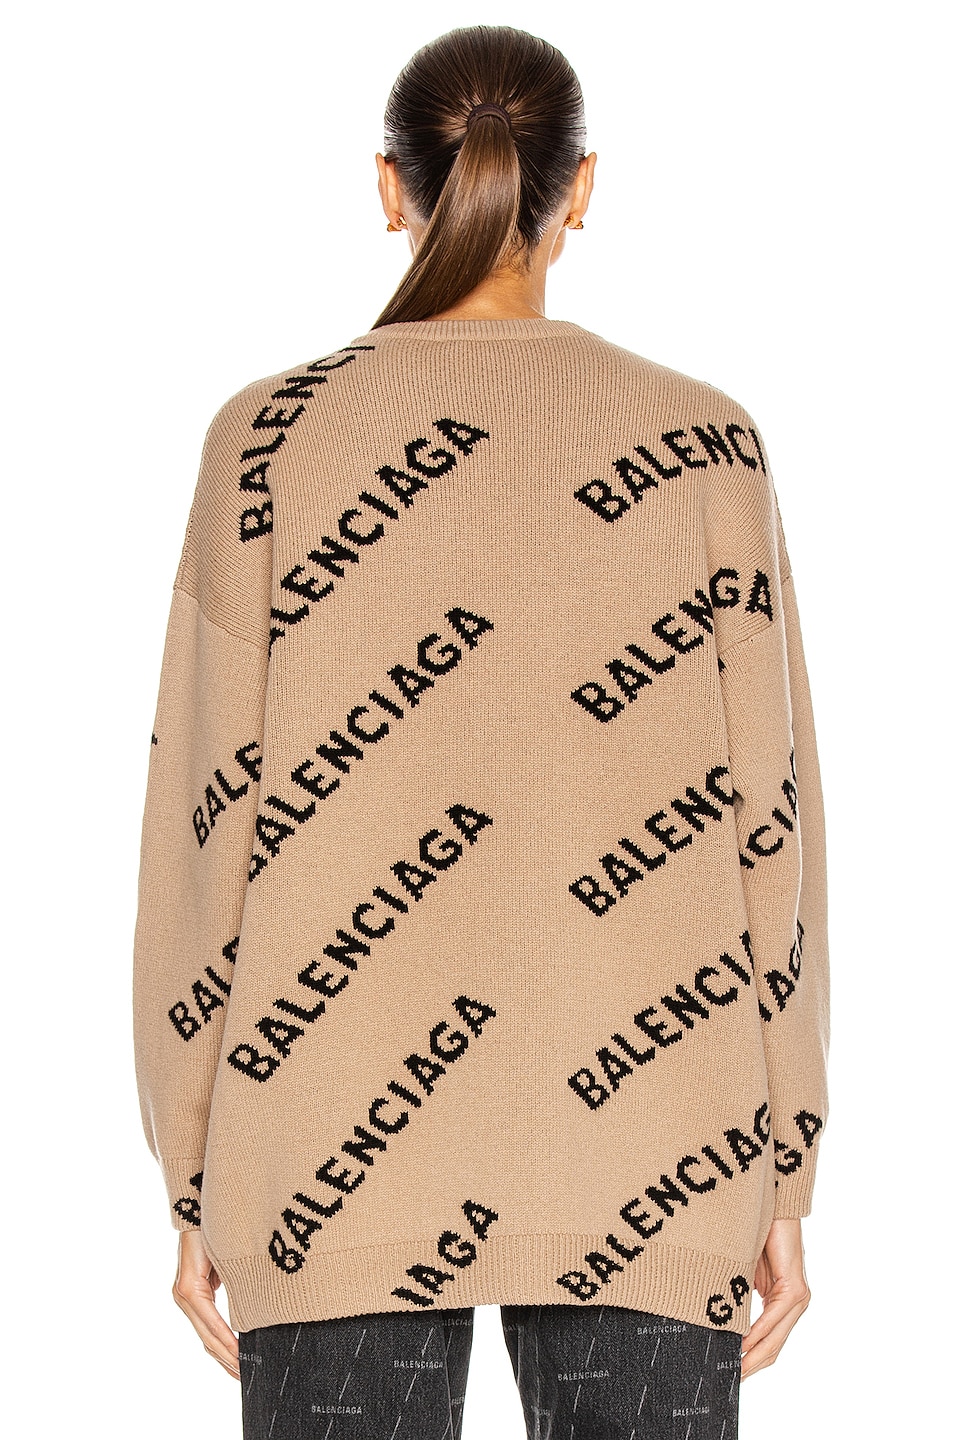 Balenciaga Long Sleeve Crewneck Logo Sweater in Beige & Black | FWRD